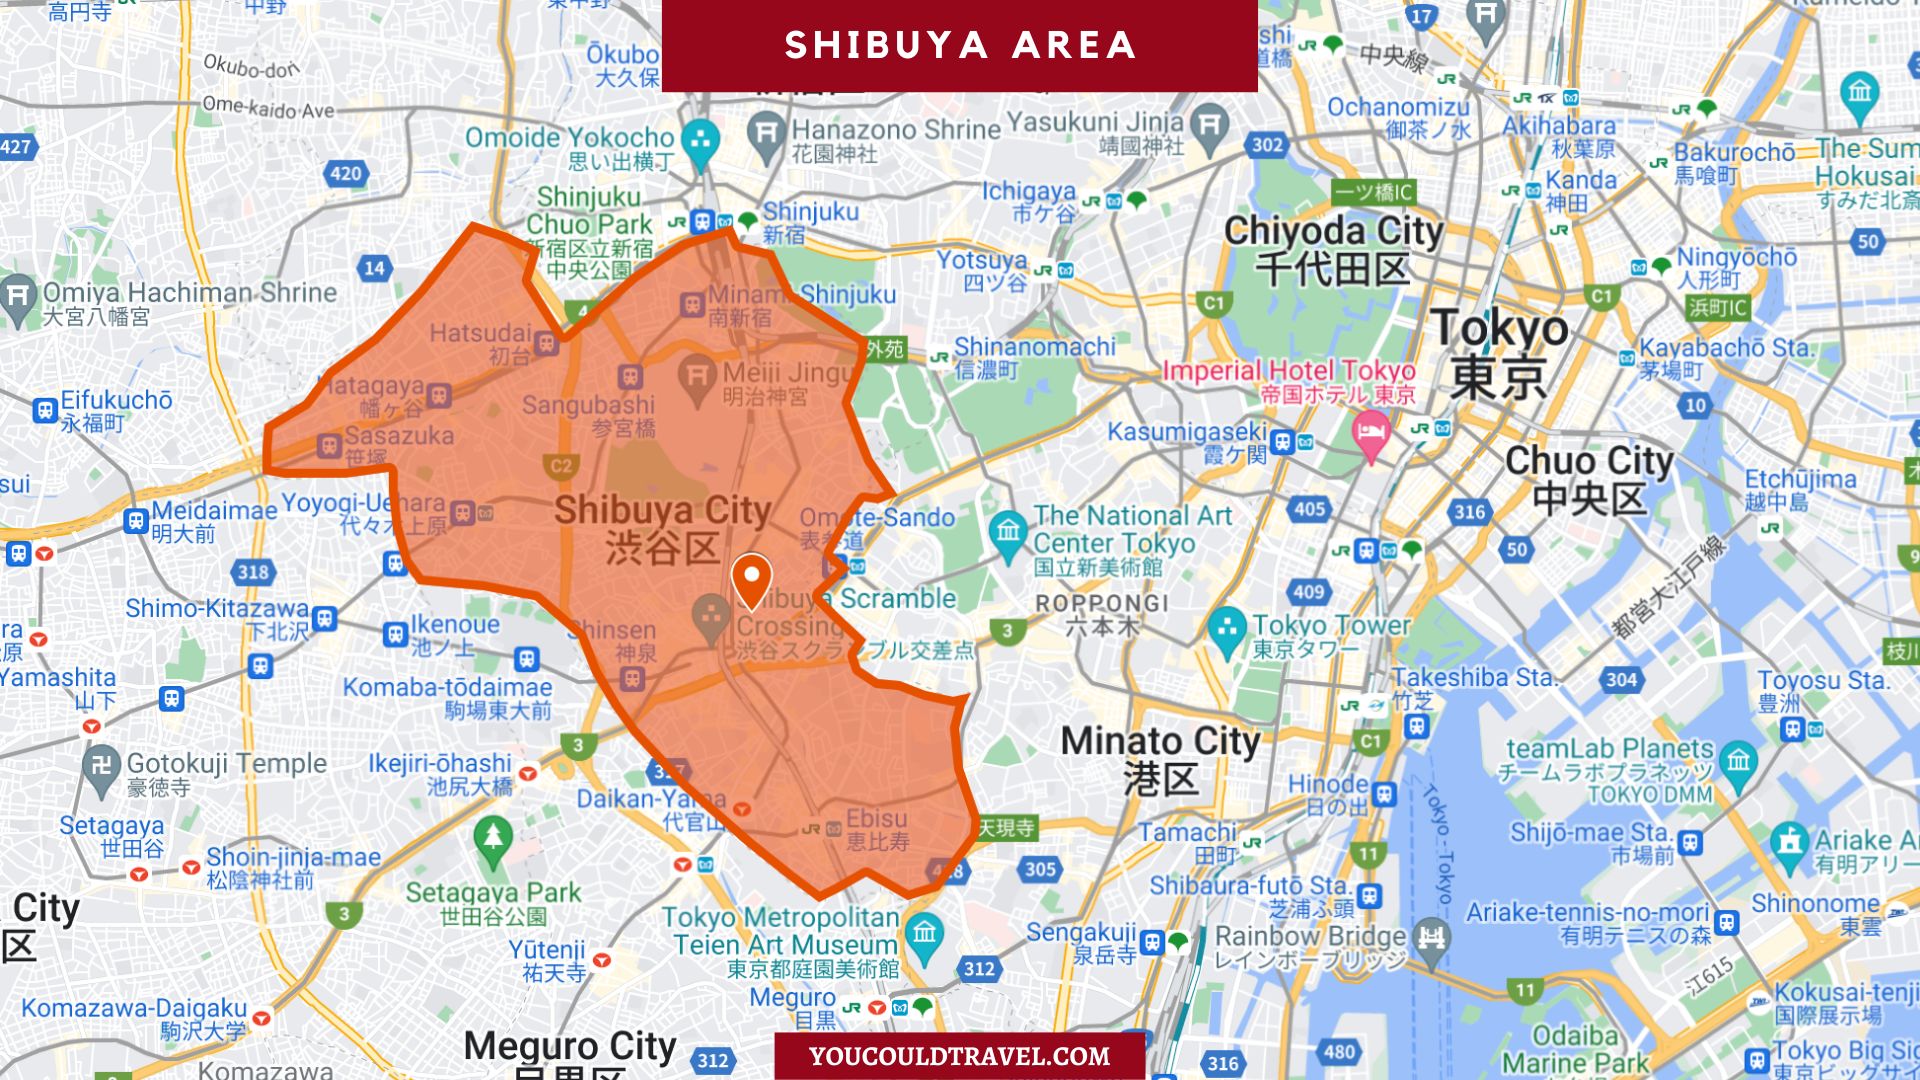 Shibuya Area Guide